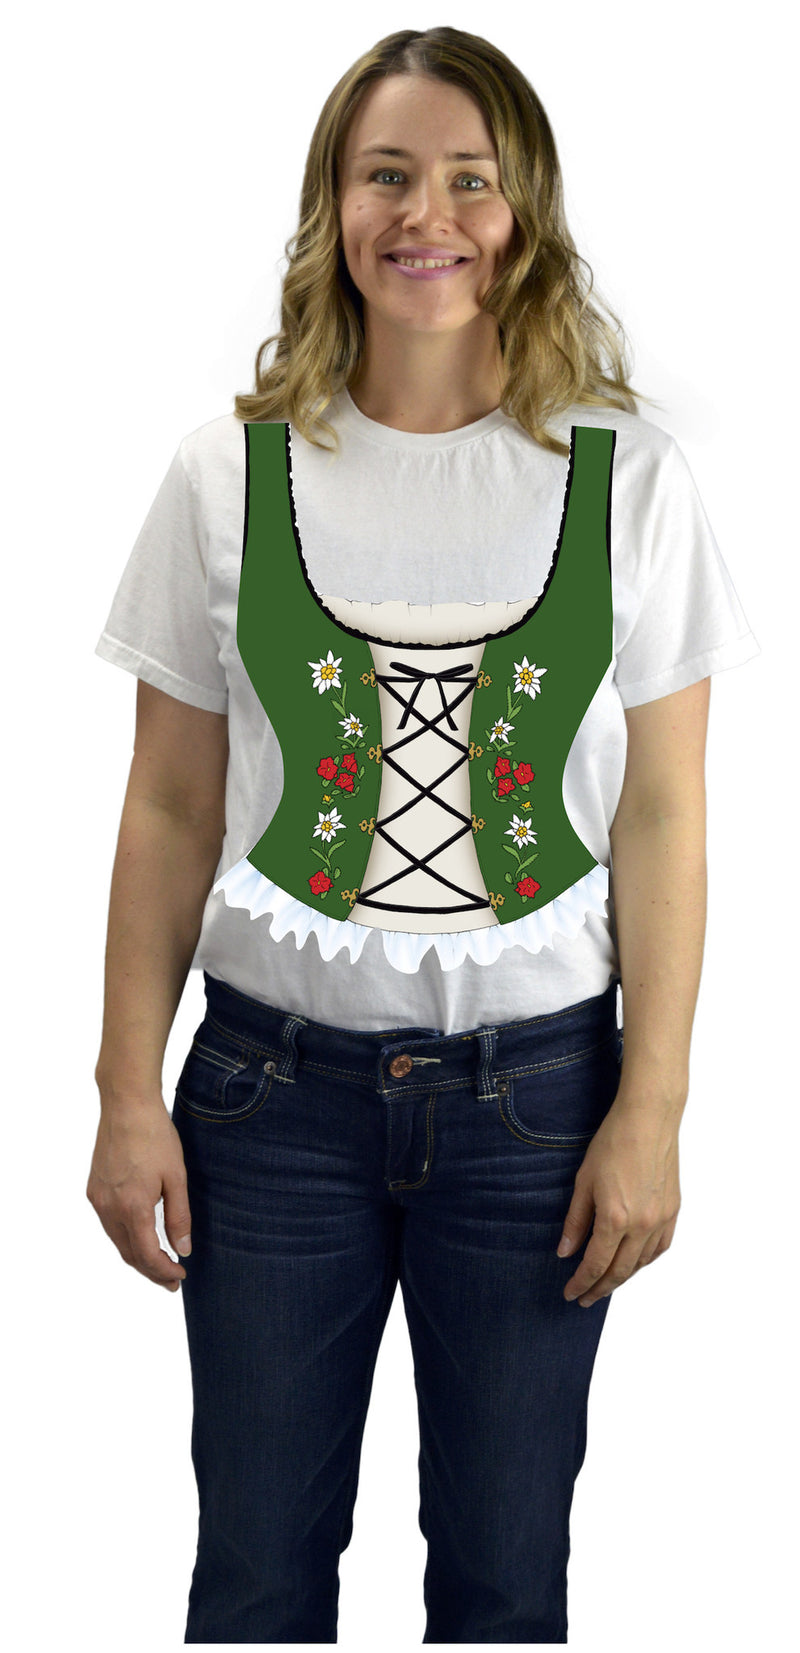 Green Oktoberfest Costume Dirndl T-Shirt - Apparel- Costumes - German - Womens, Apparel- T Shirts, Apparel-Costumes, German, Green, New Products, NP Upload, Small, Under $25, Yr-2015